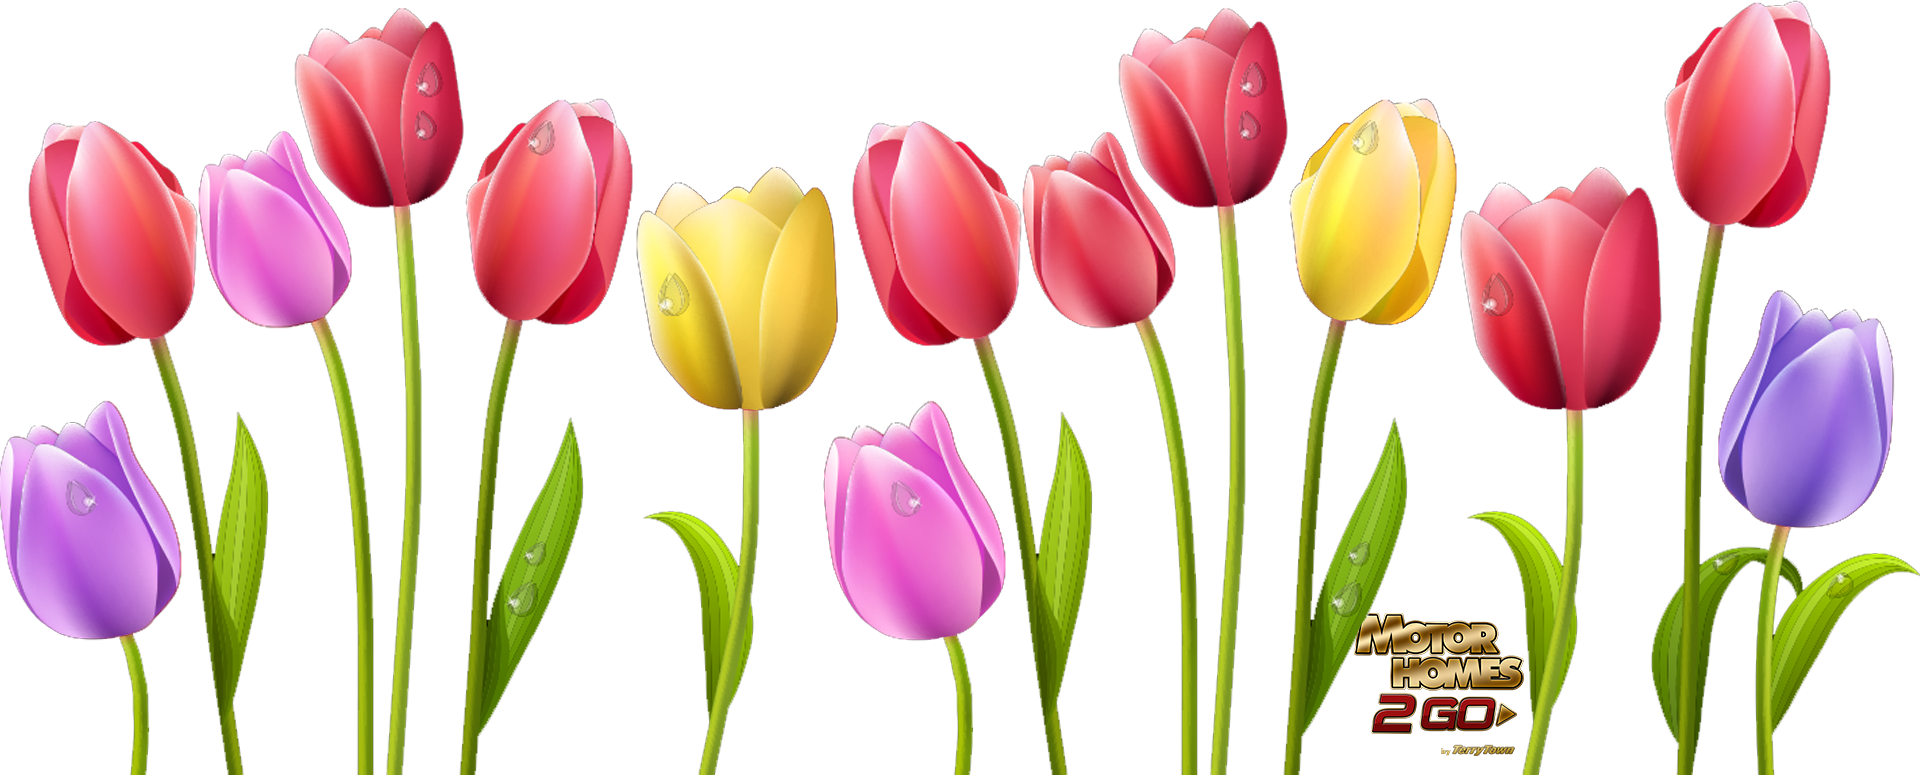 Jokingart com . Flower clipart tulip